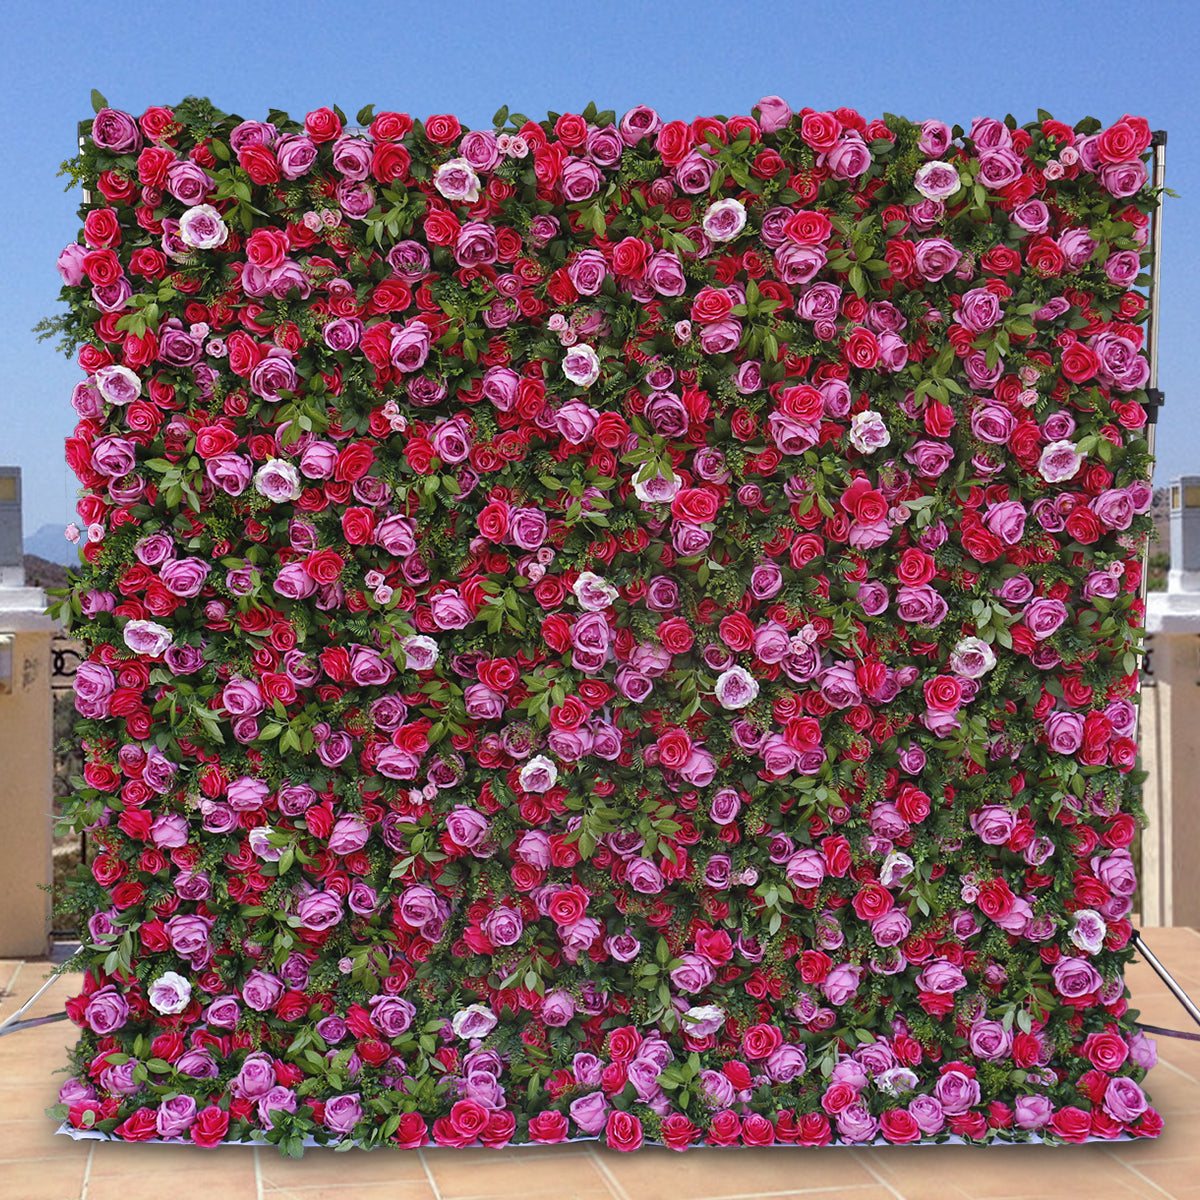 5D Artificial Flower Wall Arrangement Wedding Party Birthday Backdrop Decor HQ9021